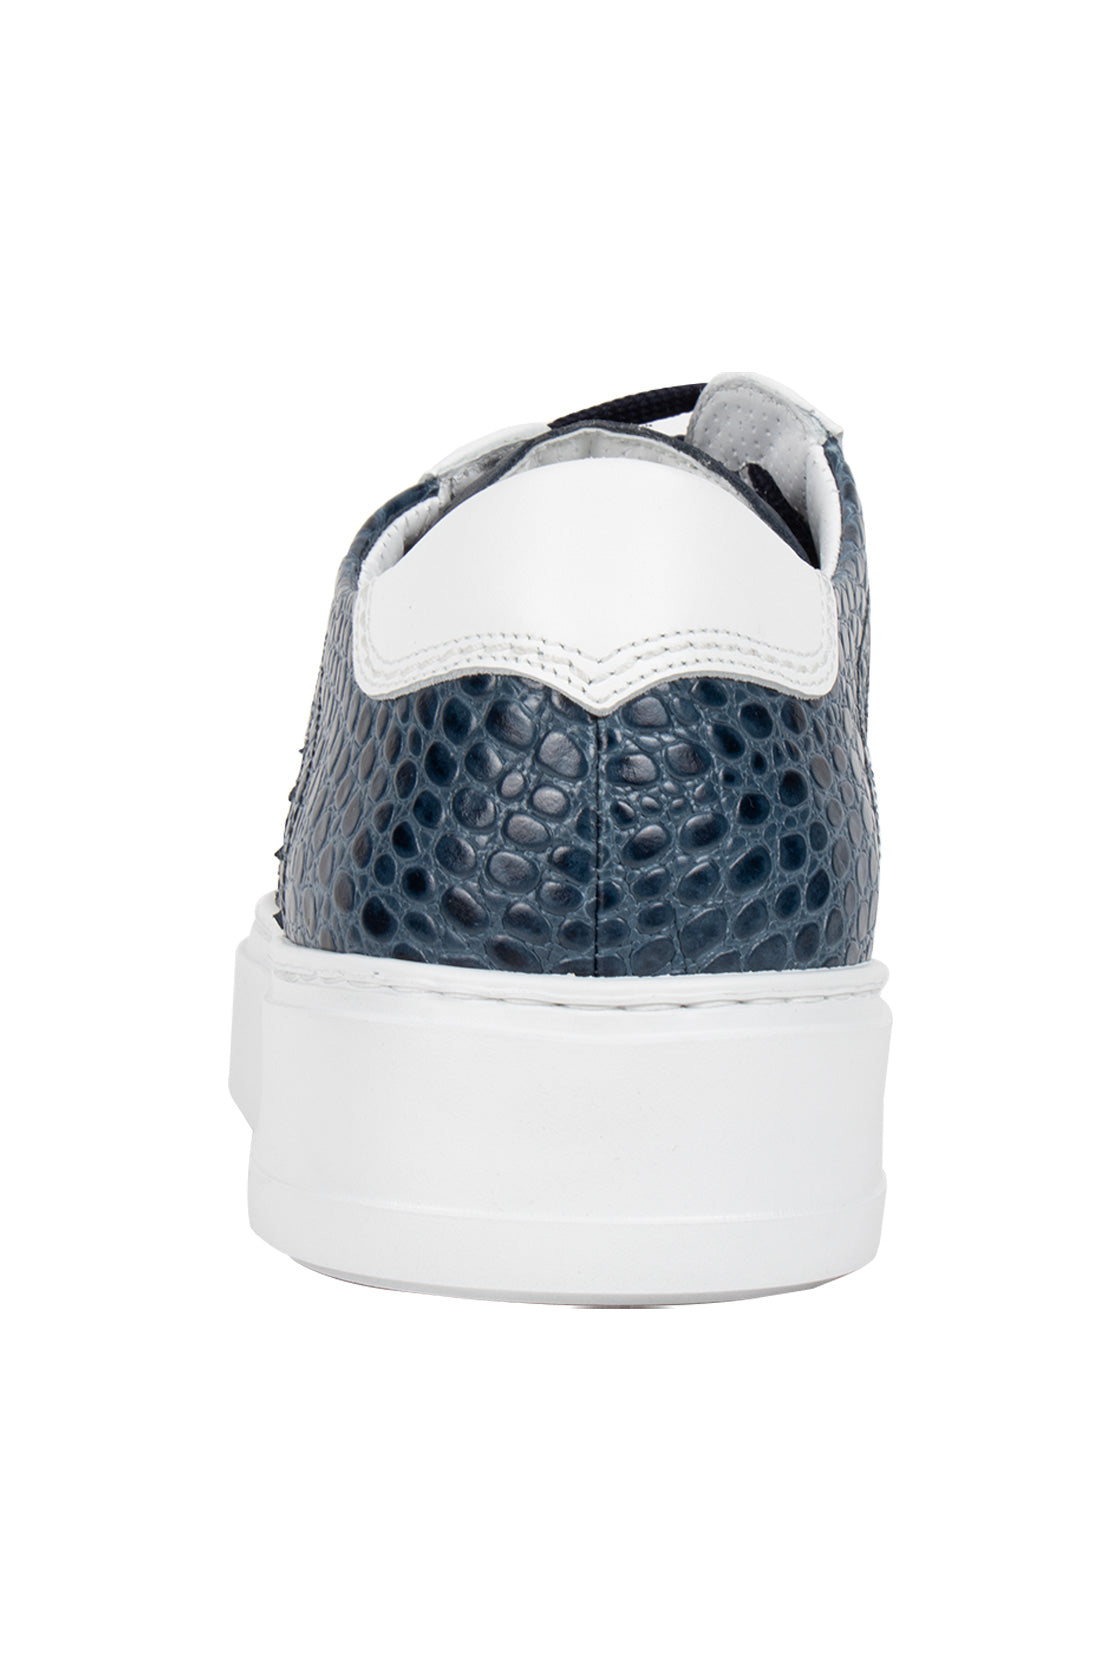 Galizio Torresi Lace Sneaker Sky/Wht/Blue